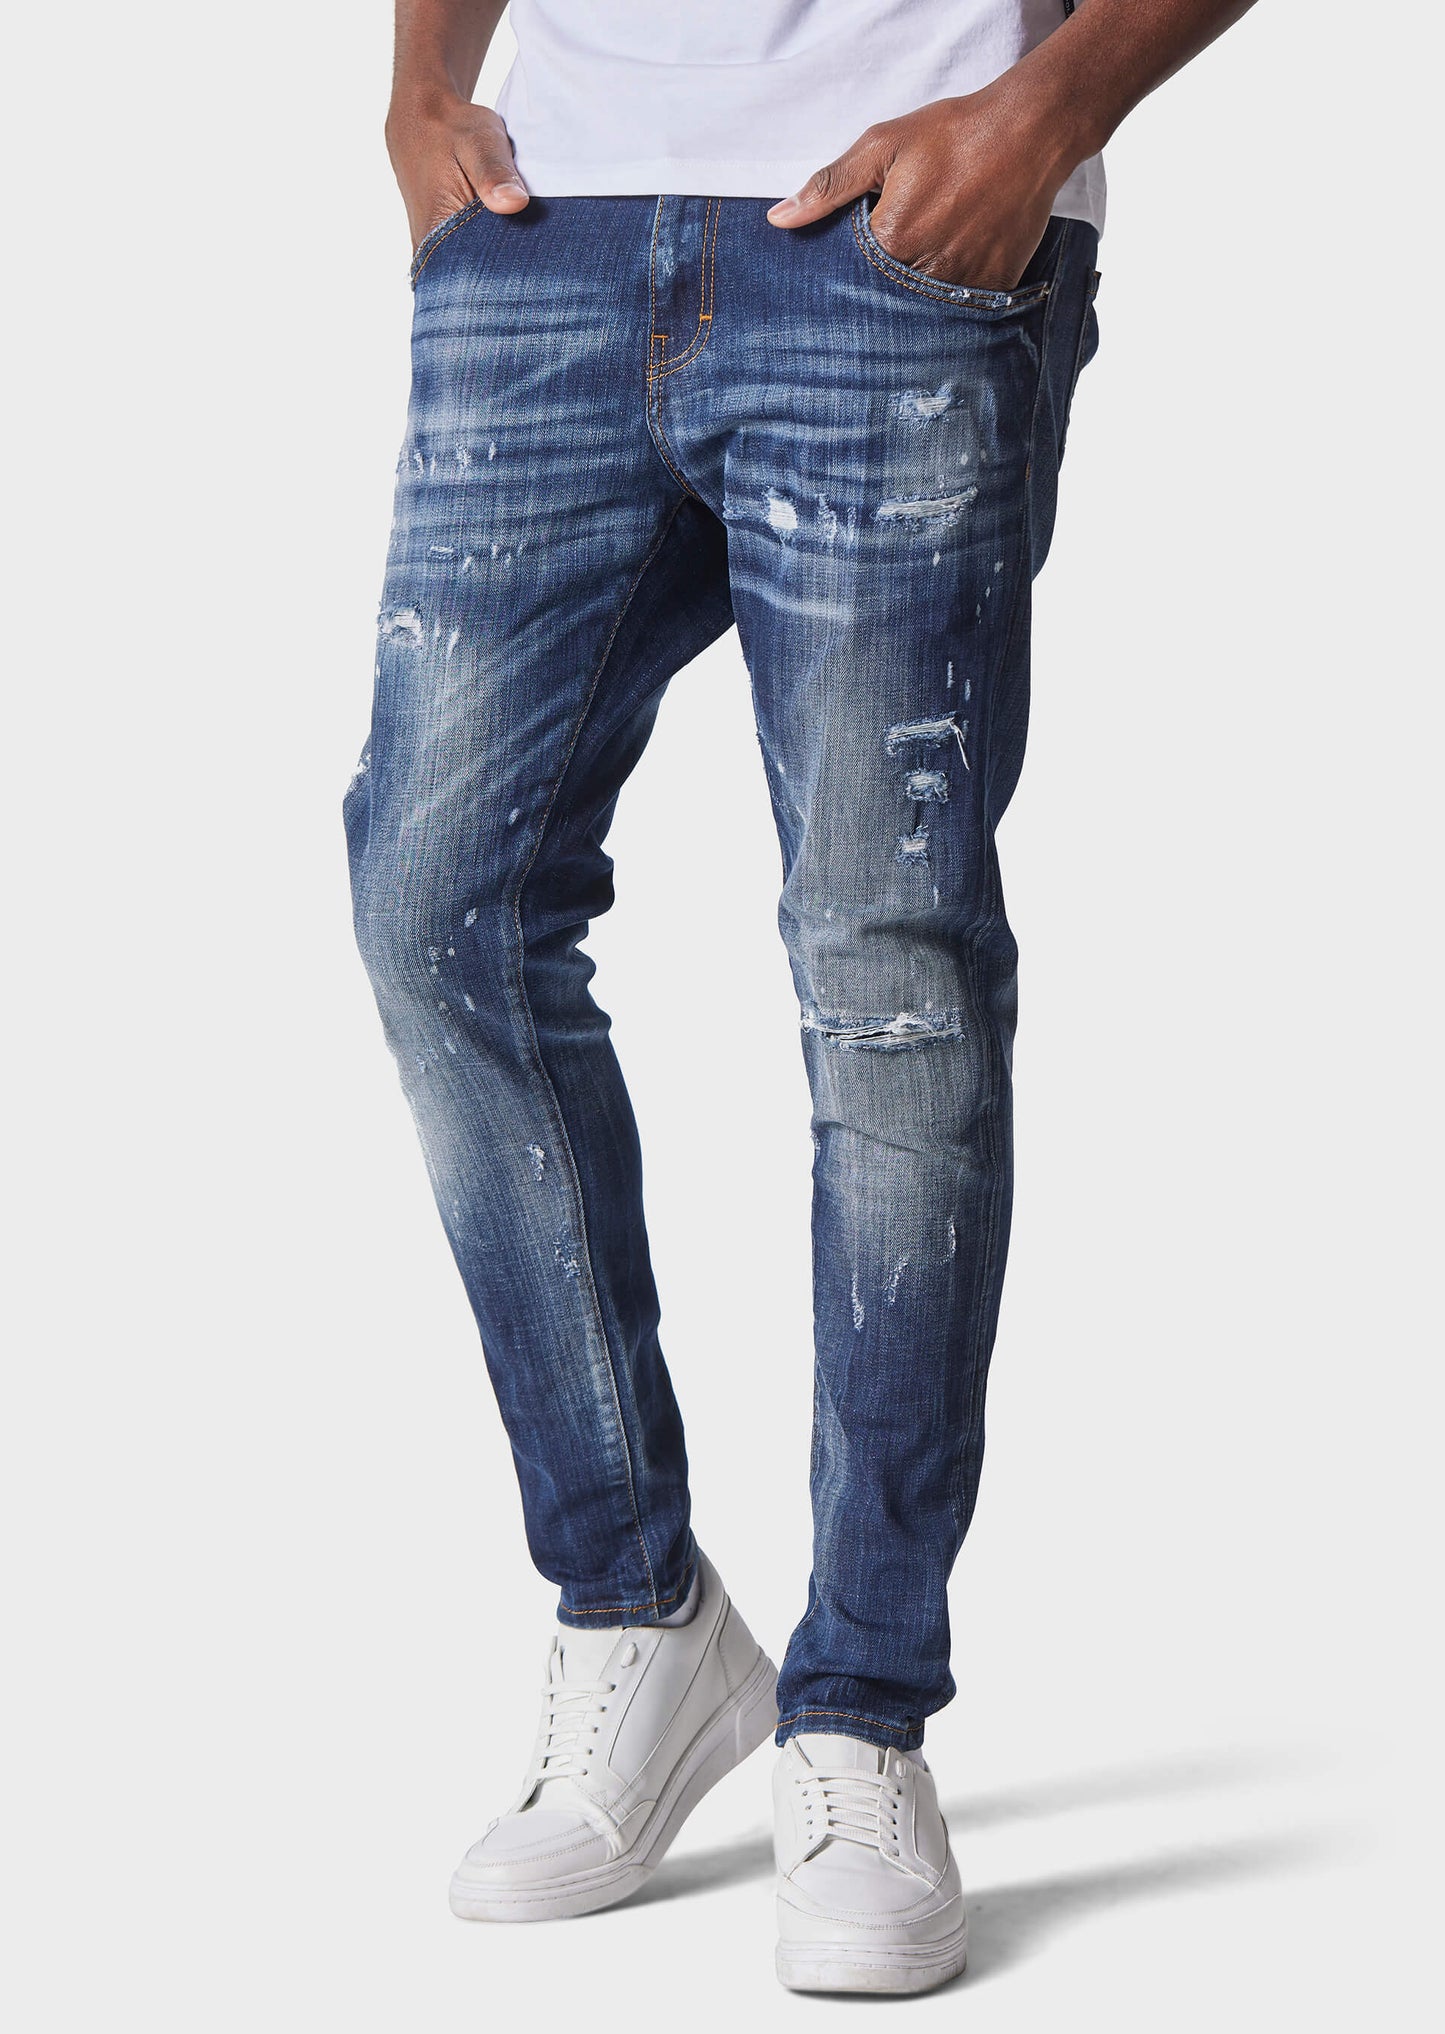 Deniro Lat 977 Slim Fit Jeans